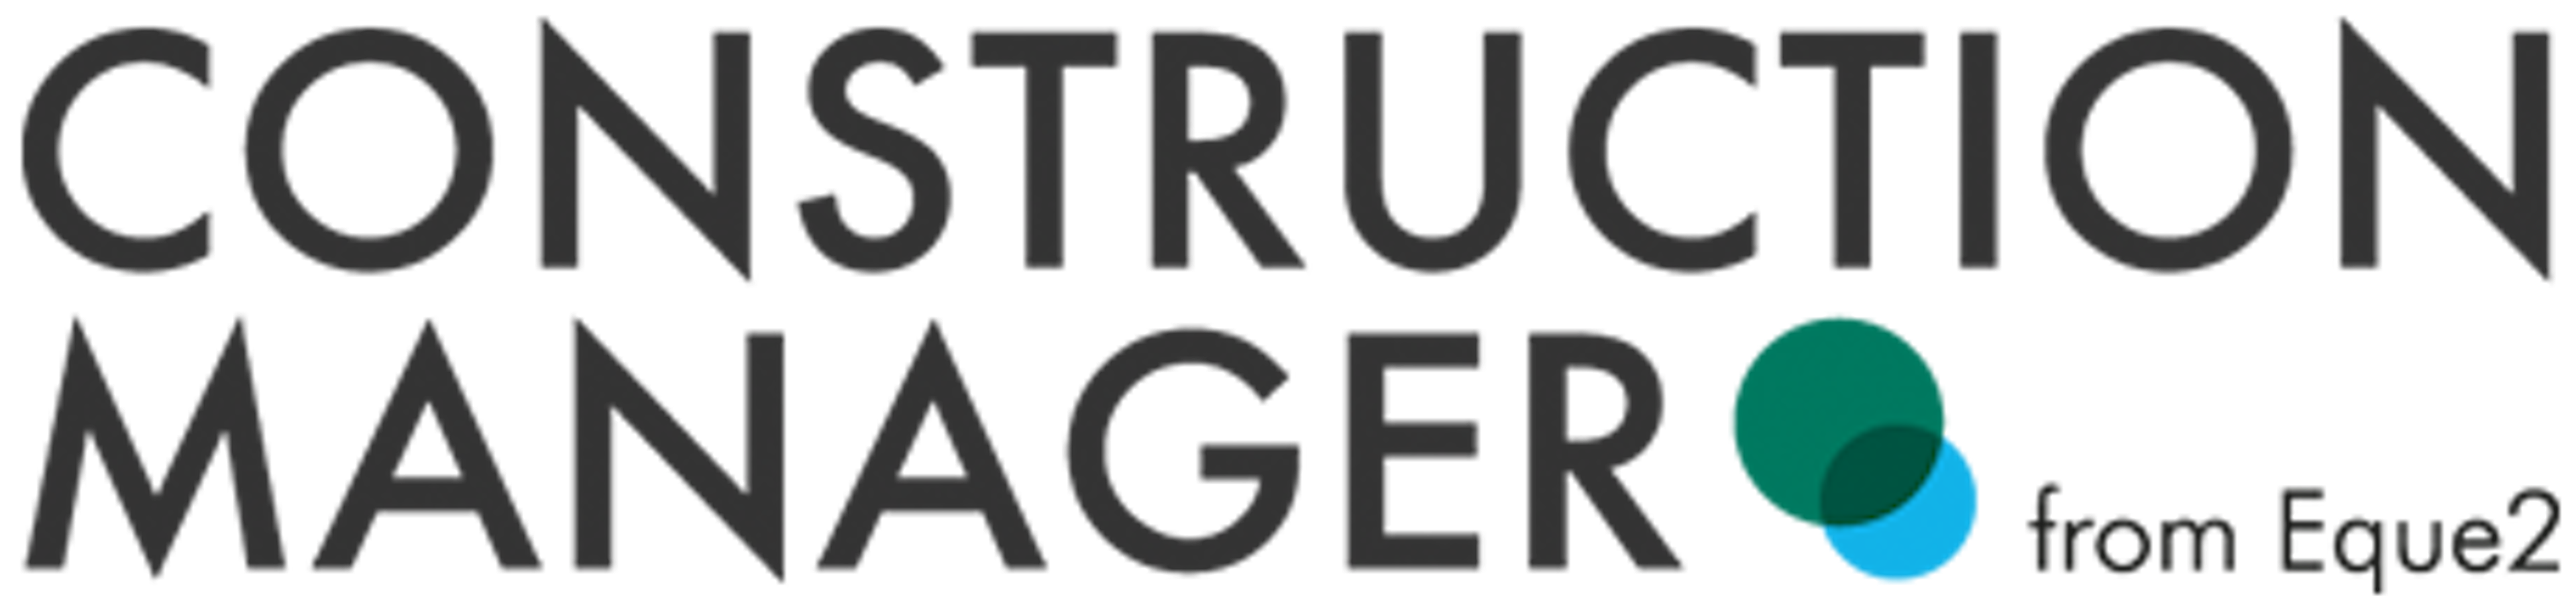 Construction Manager Logo